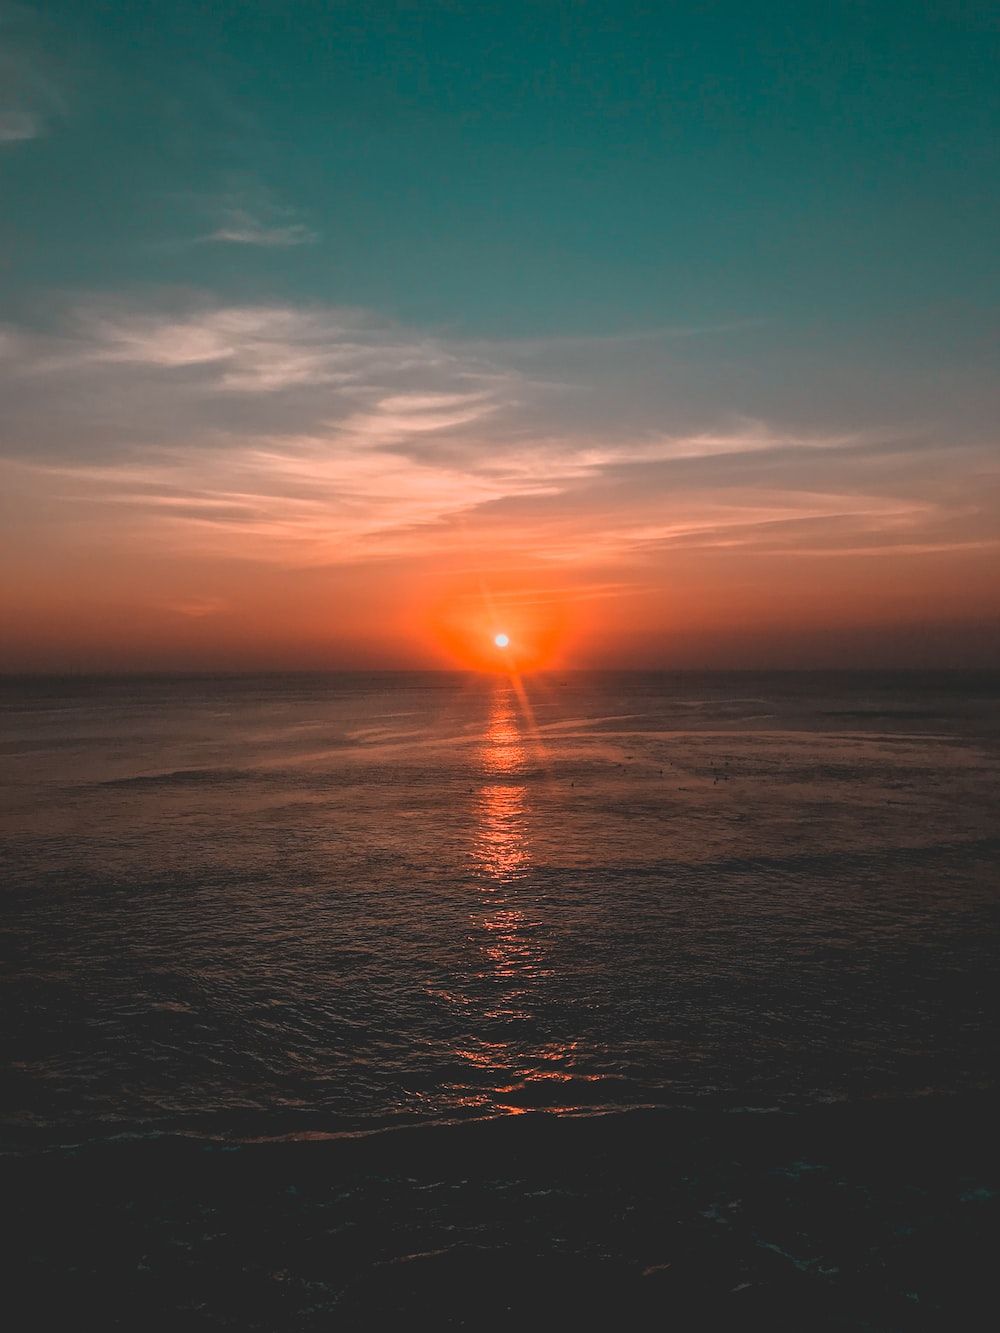 The sun setting over the ocean - Sunset